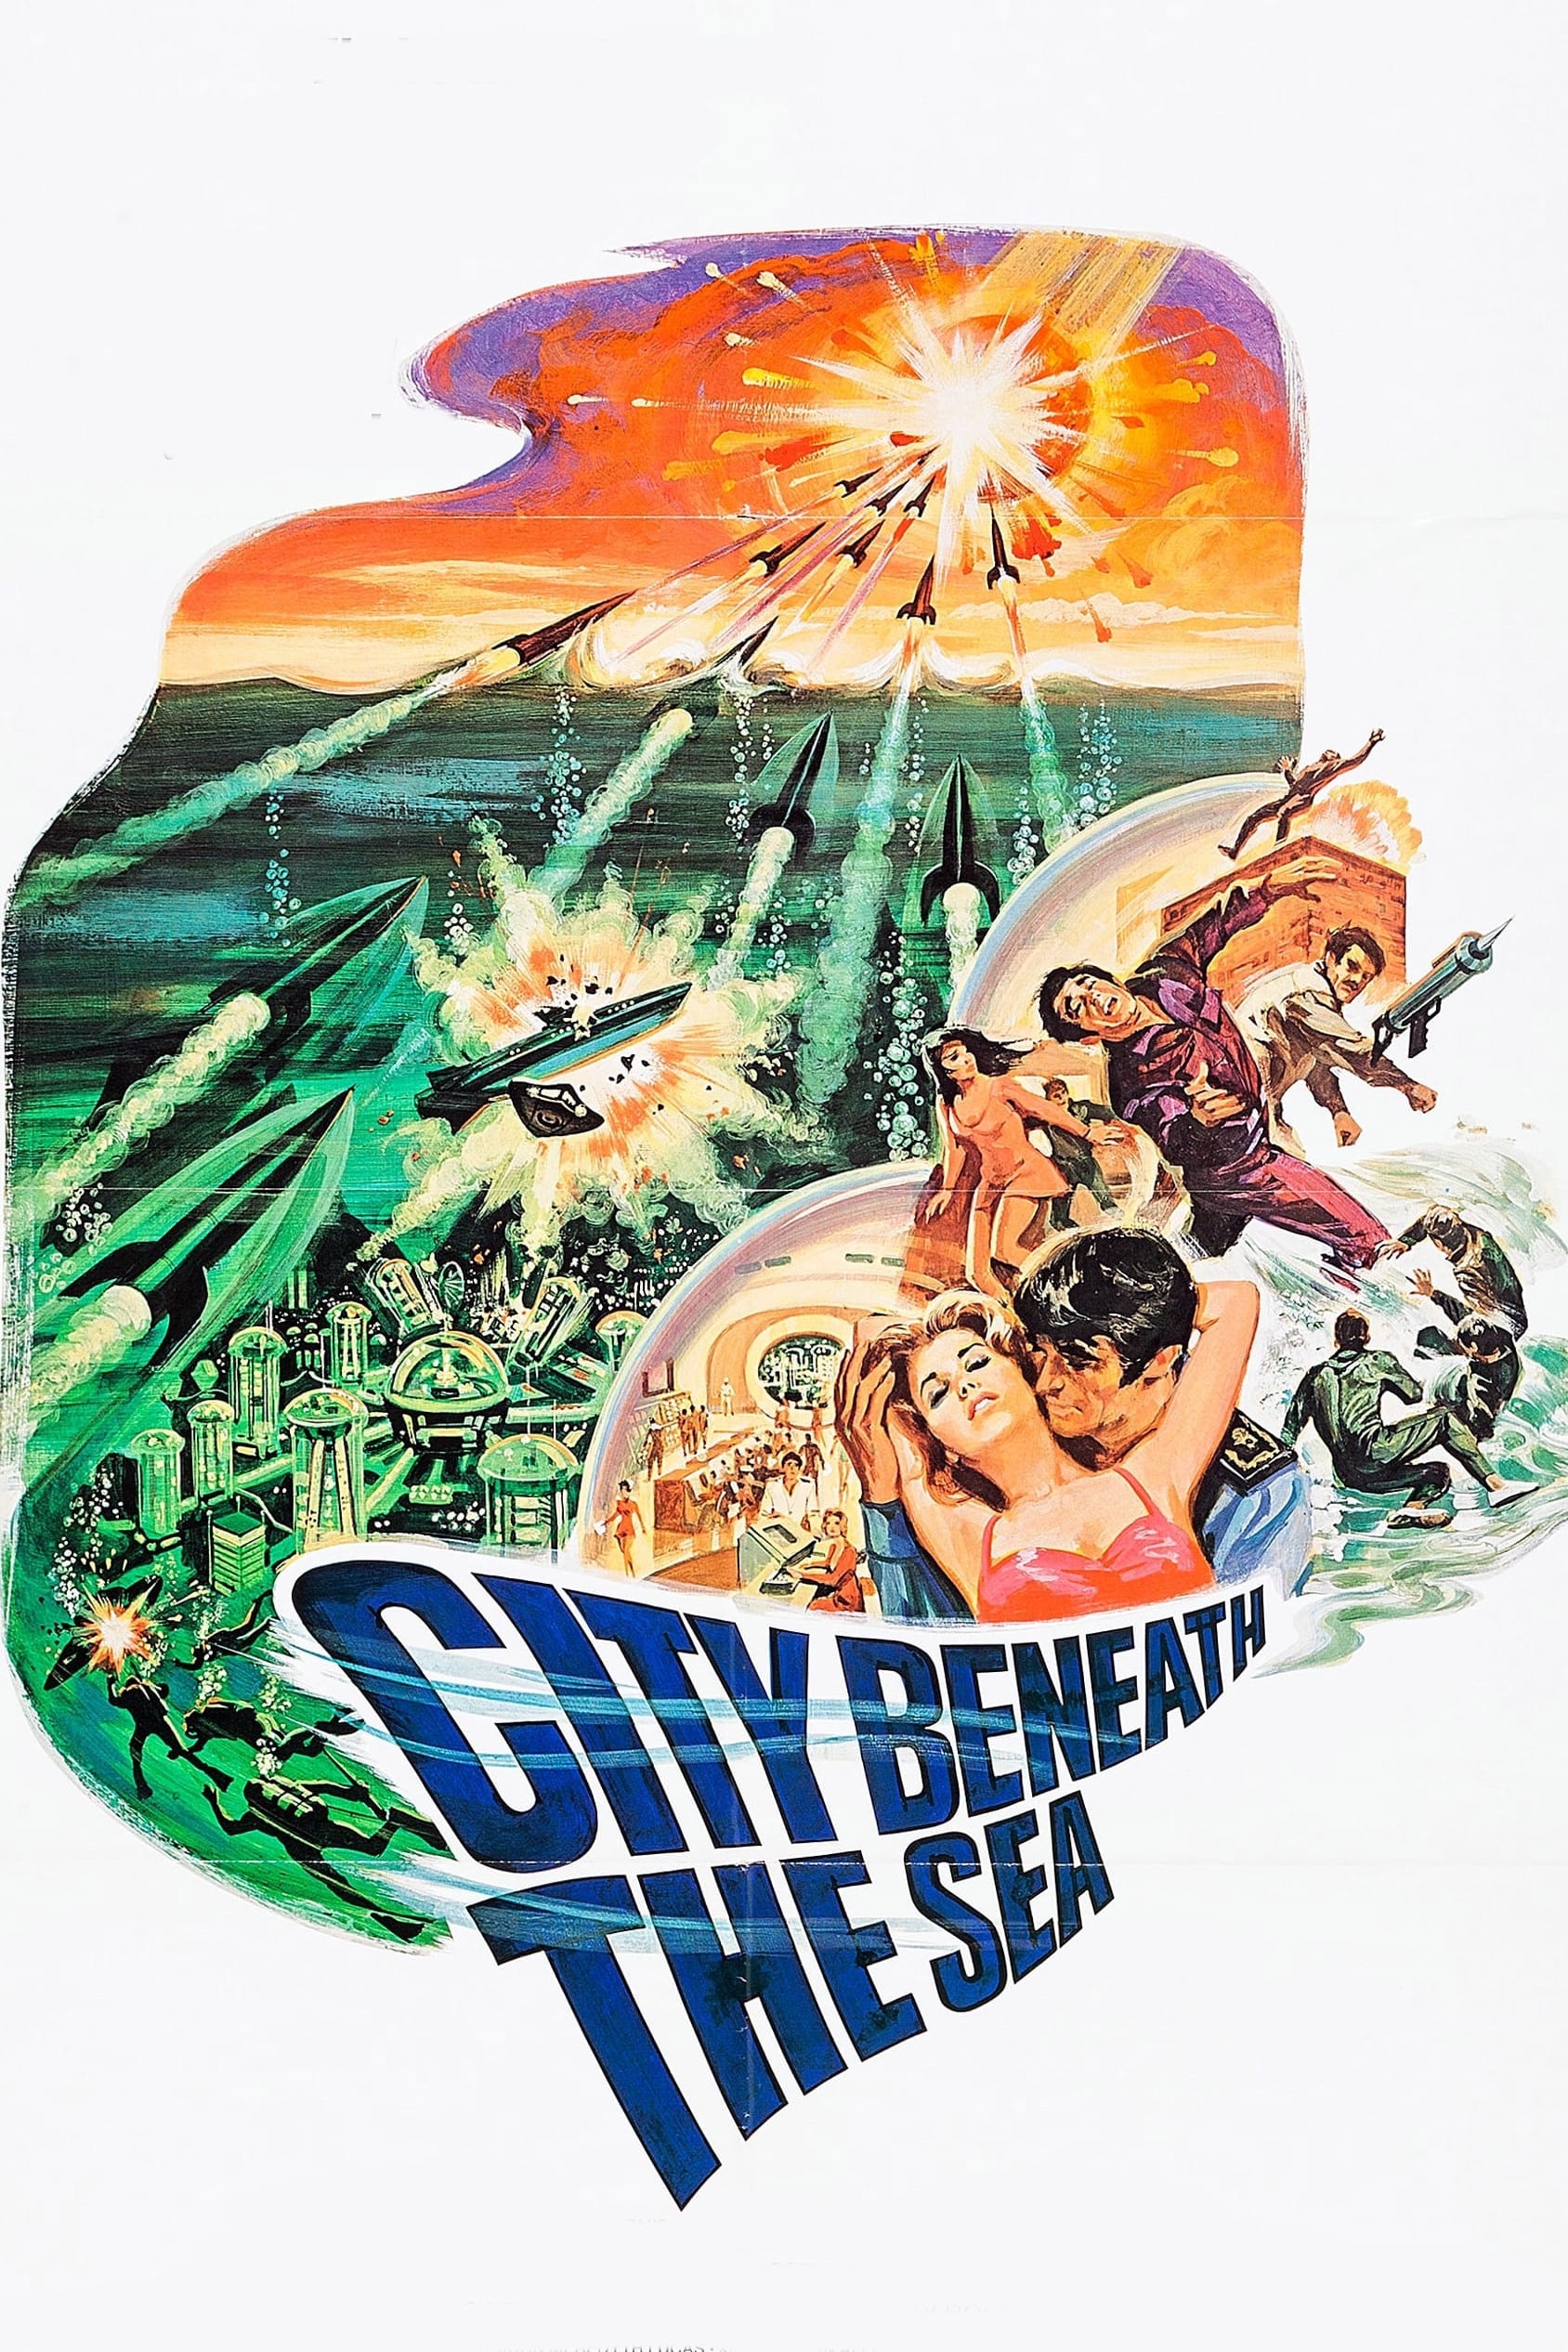 City Beneath the Sea (1971)